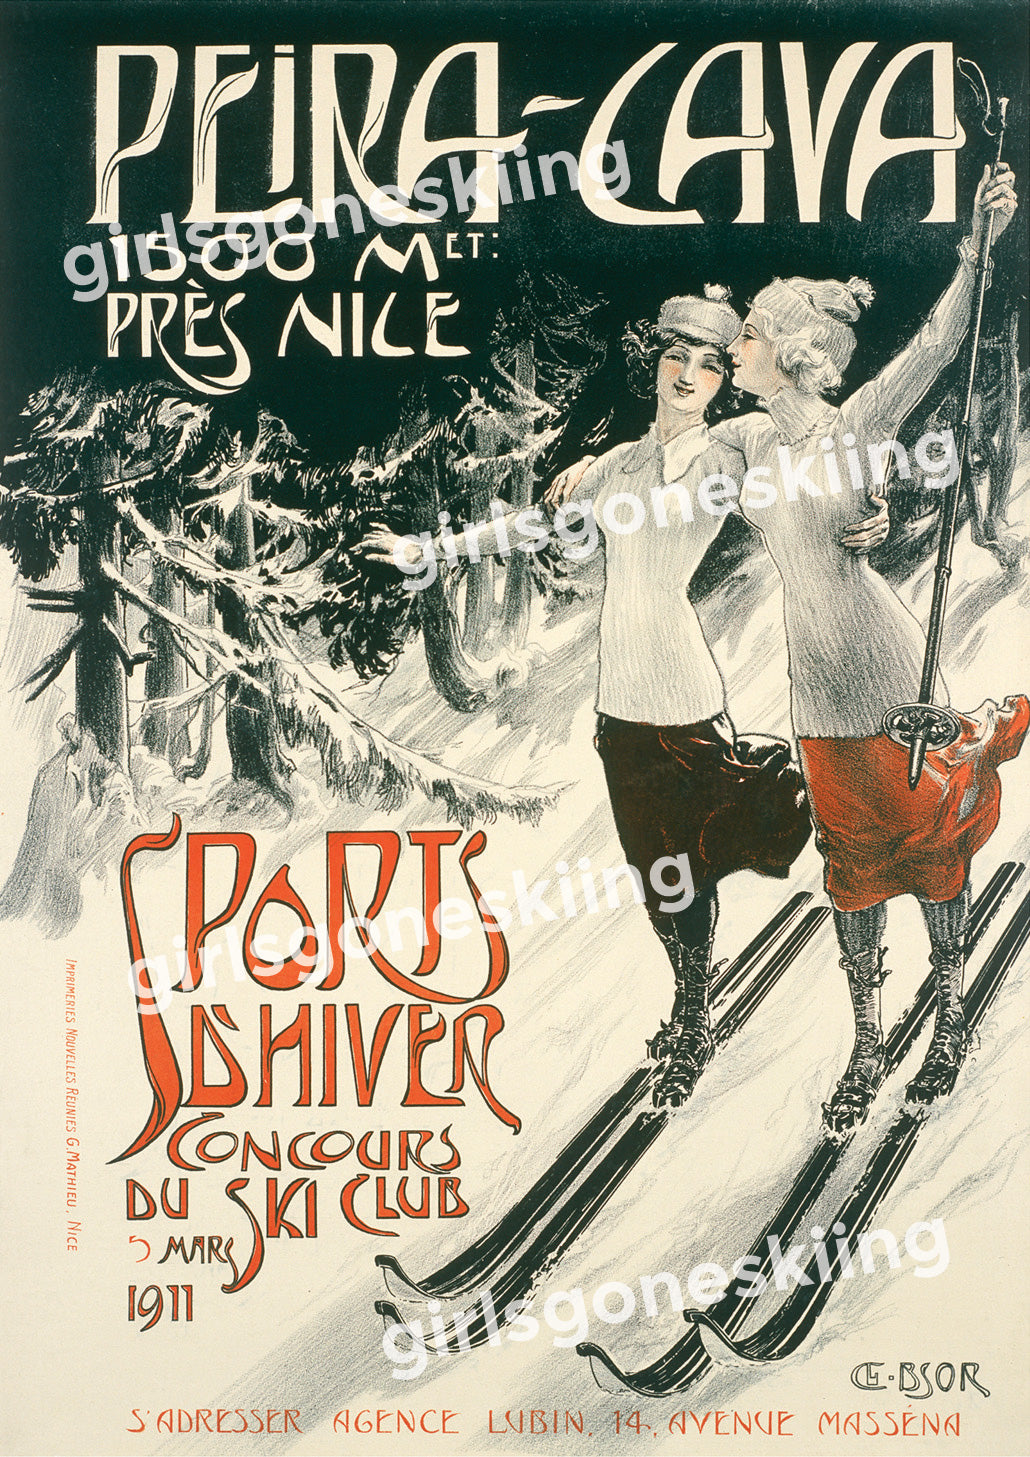 Peira-Cava Vntage Ski Poster